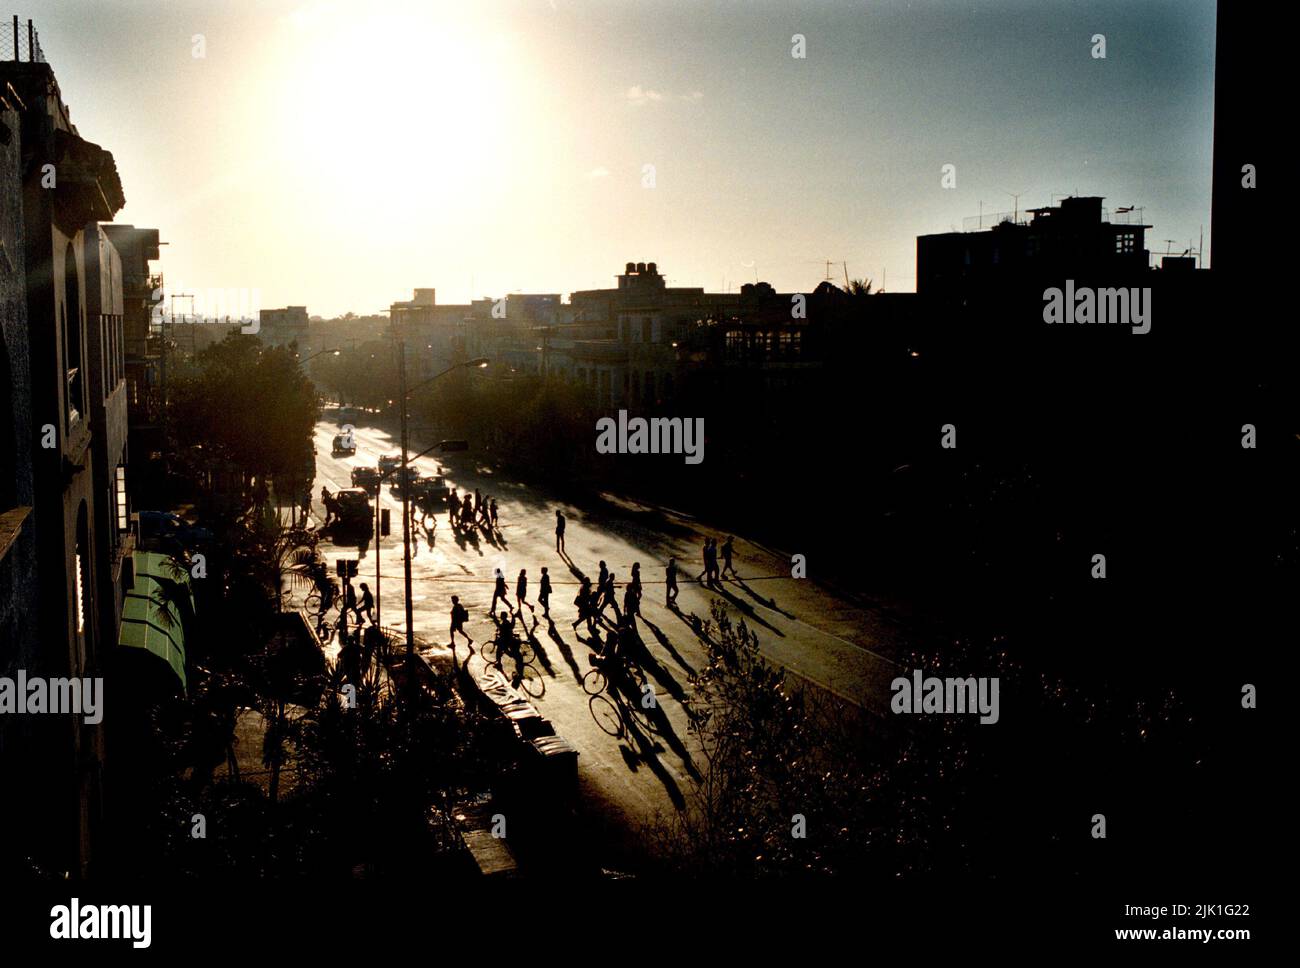 Vida cotidiana, La Habana, Cuba. Personas en un cruce. Foto de stock